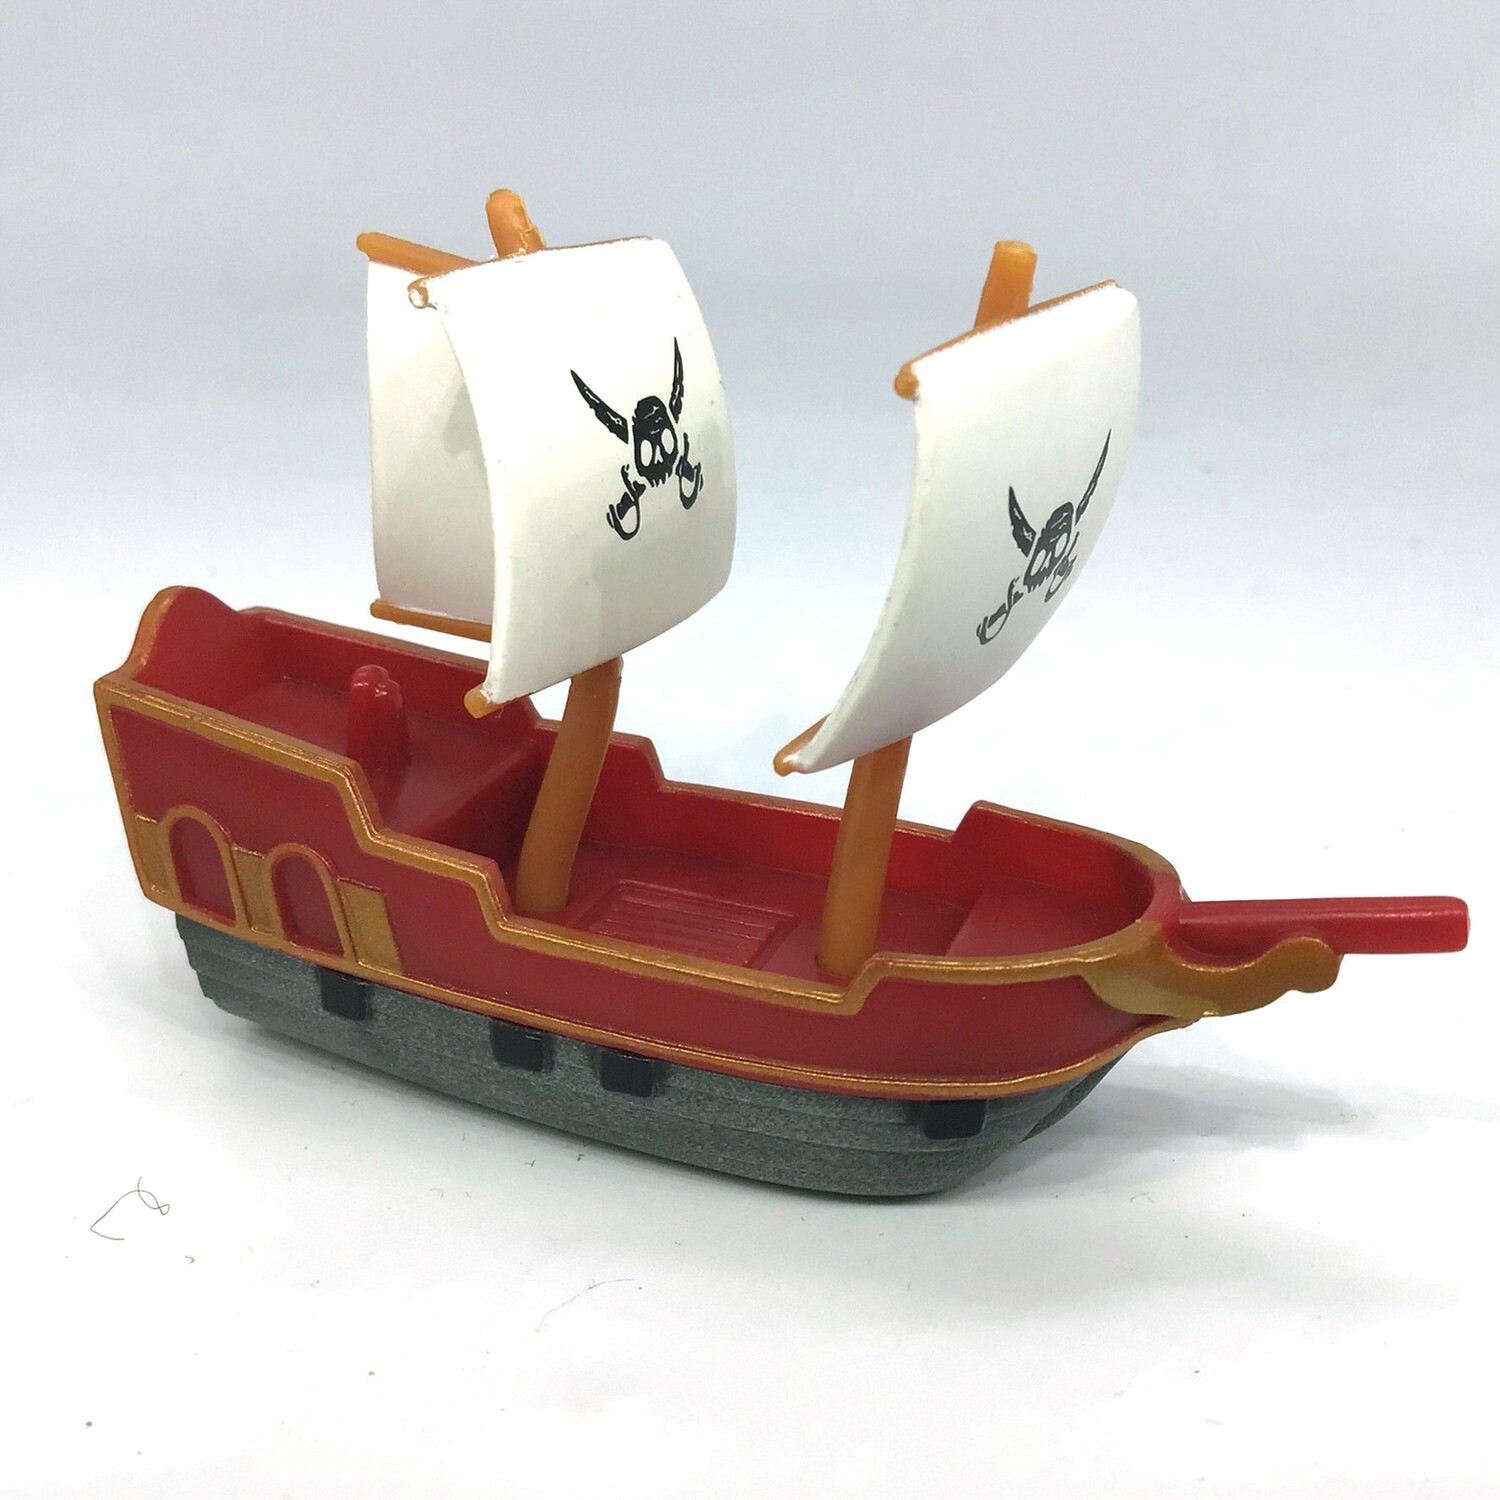 Playmobil mini bateau pirate jouet